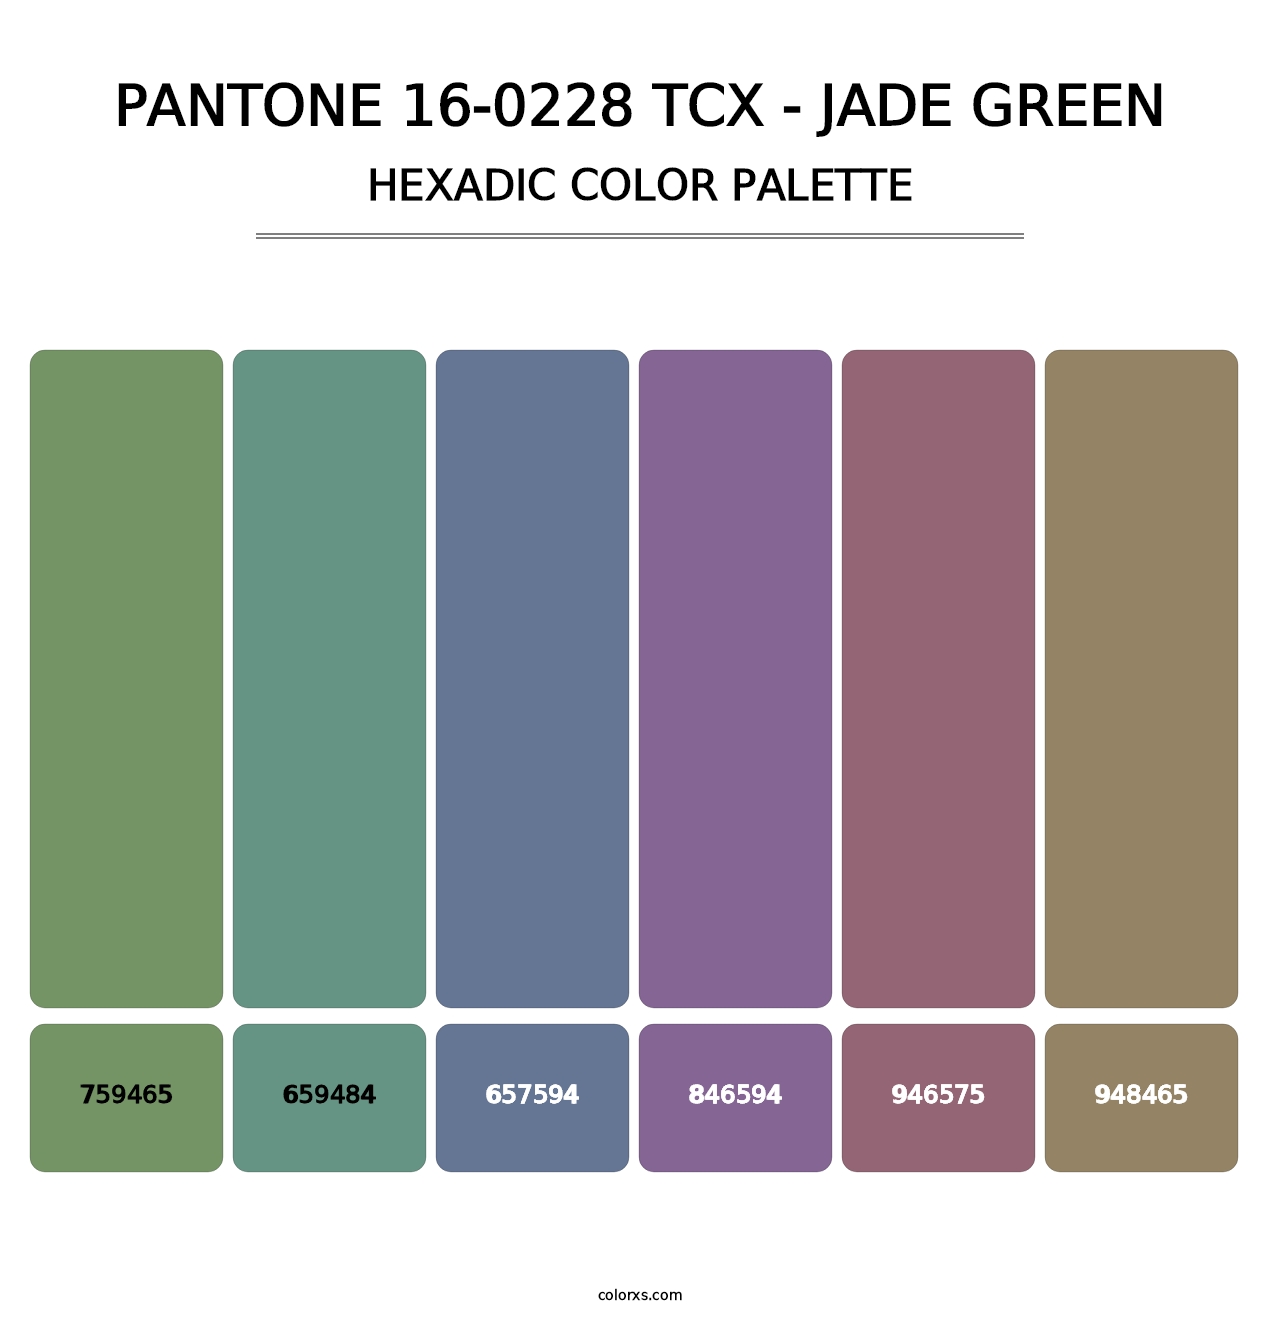 PANTONE 16-0228 TCX - Jade Green - Hexadic Color Palette